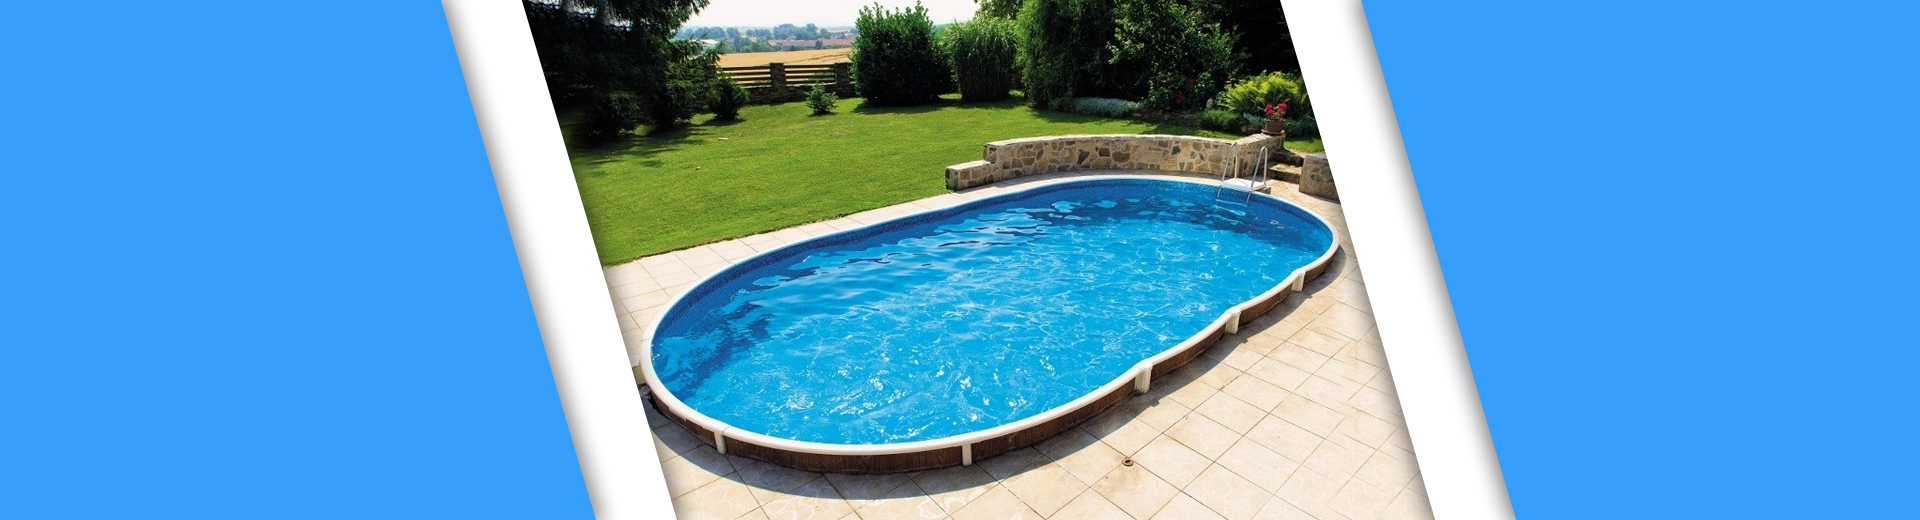 Azuro Vario WOOD - Oval swimming pool